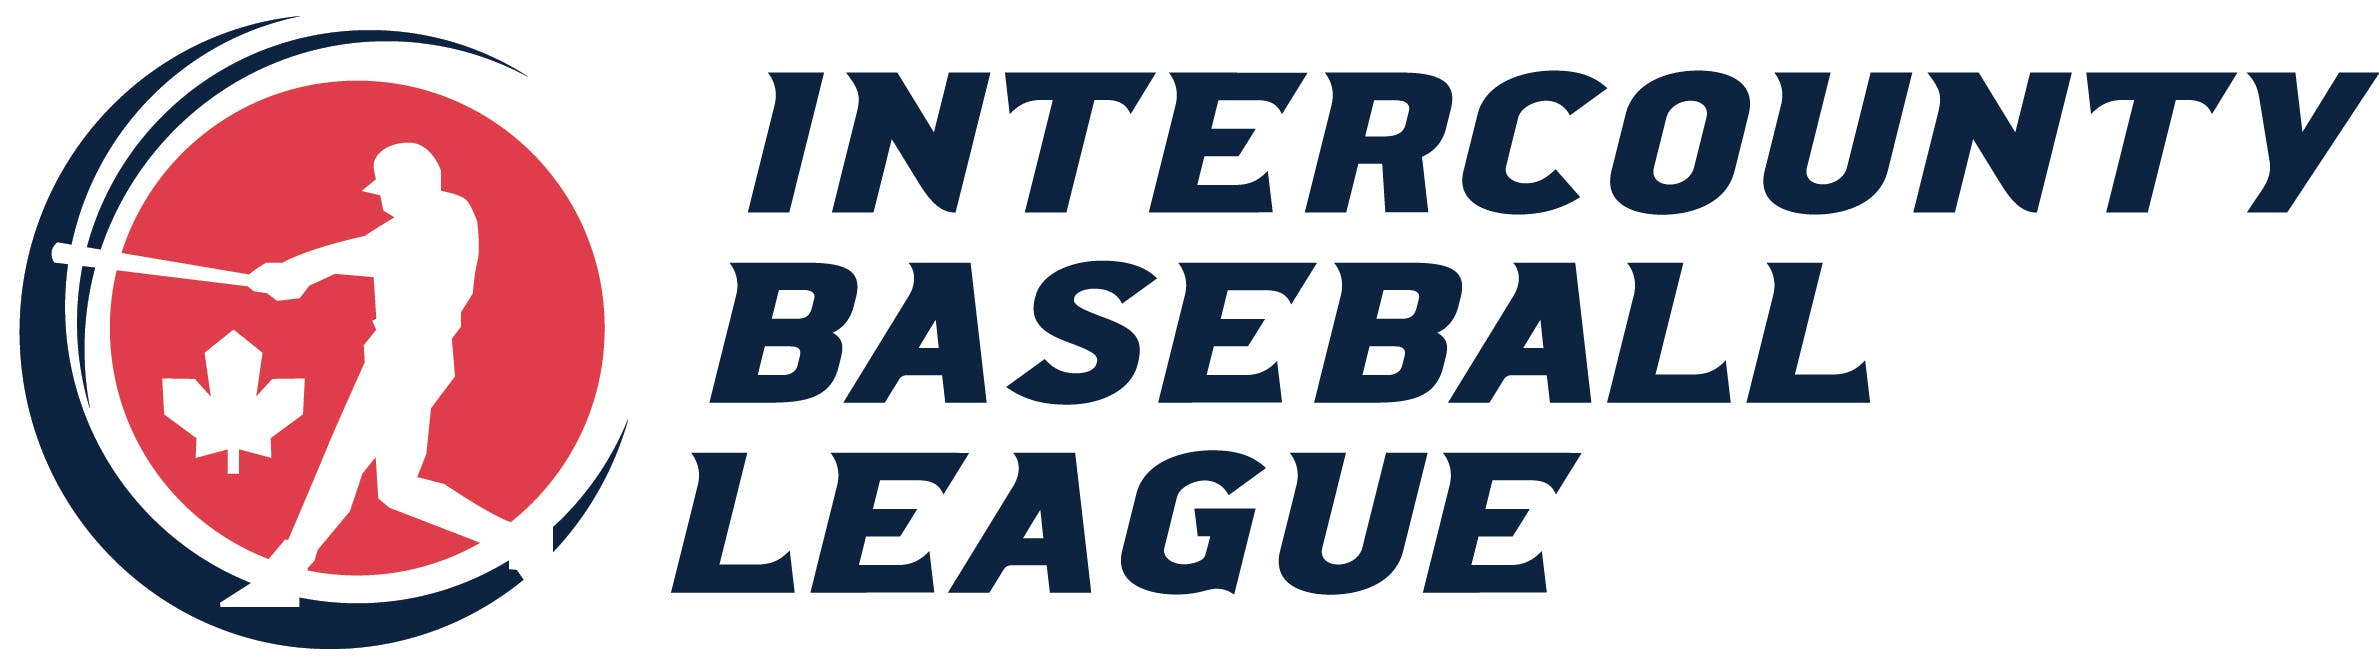 Intercounty Baseball League.jpg